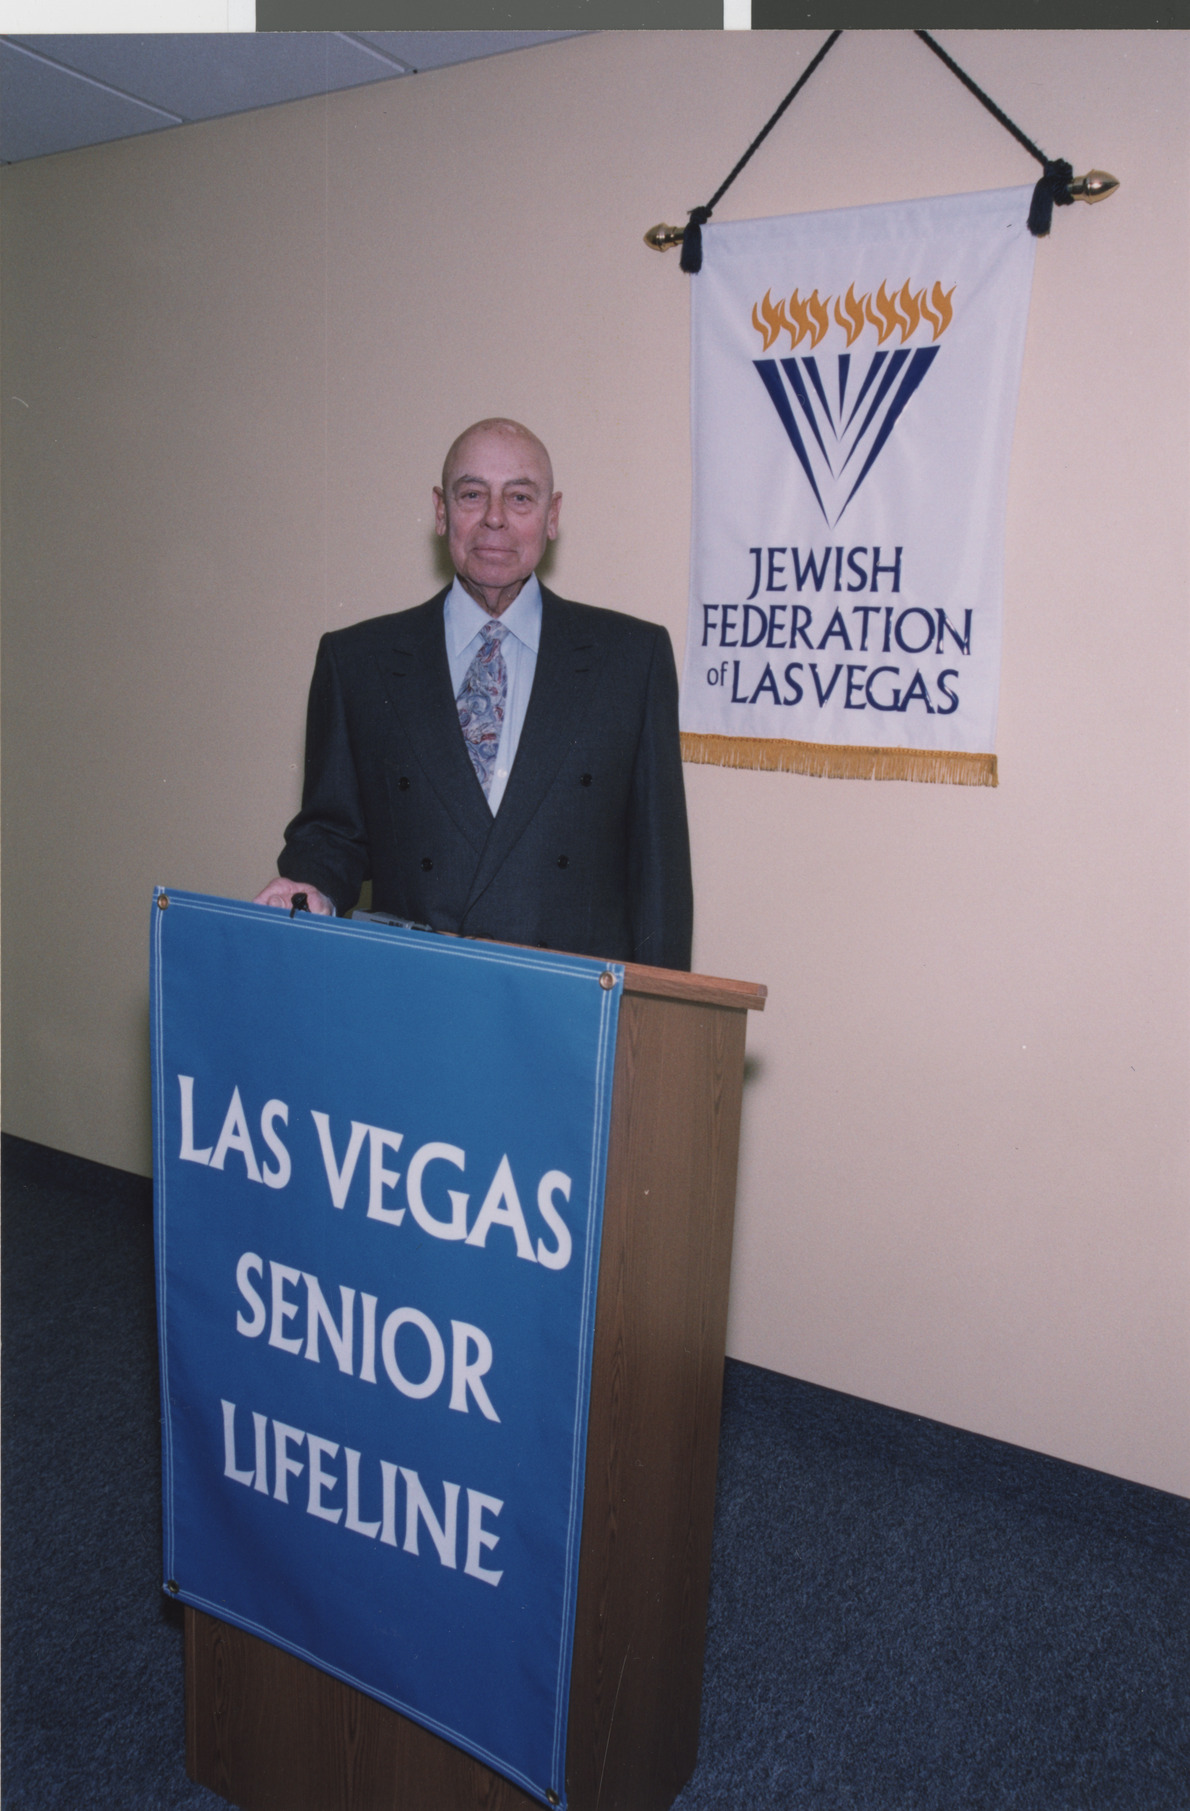 Photograph of Neil Galatz at Las Vegas Senior Lifeline, undated